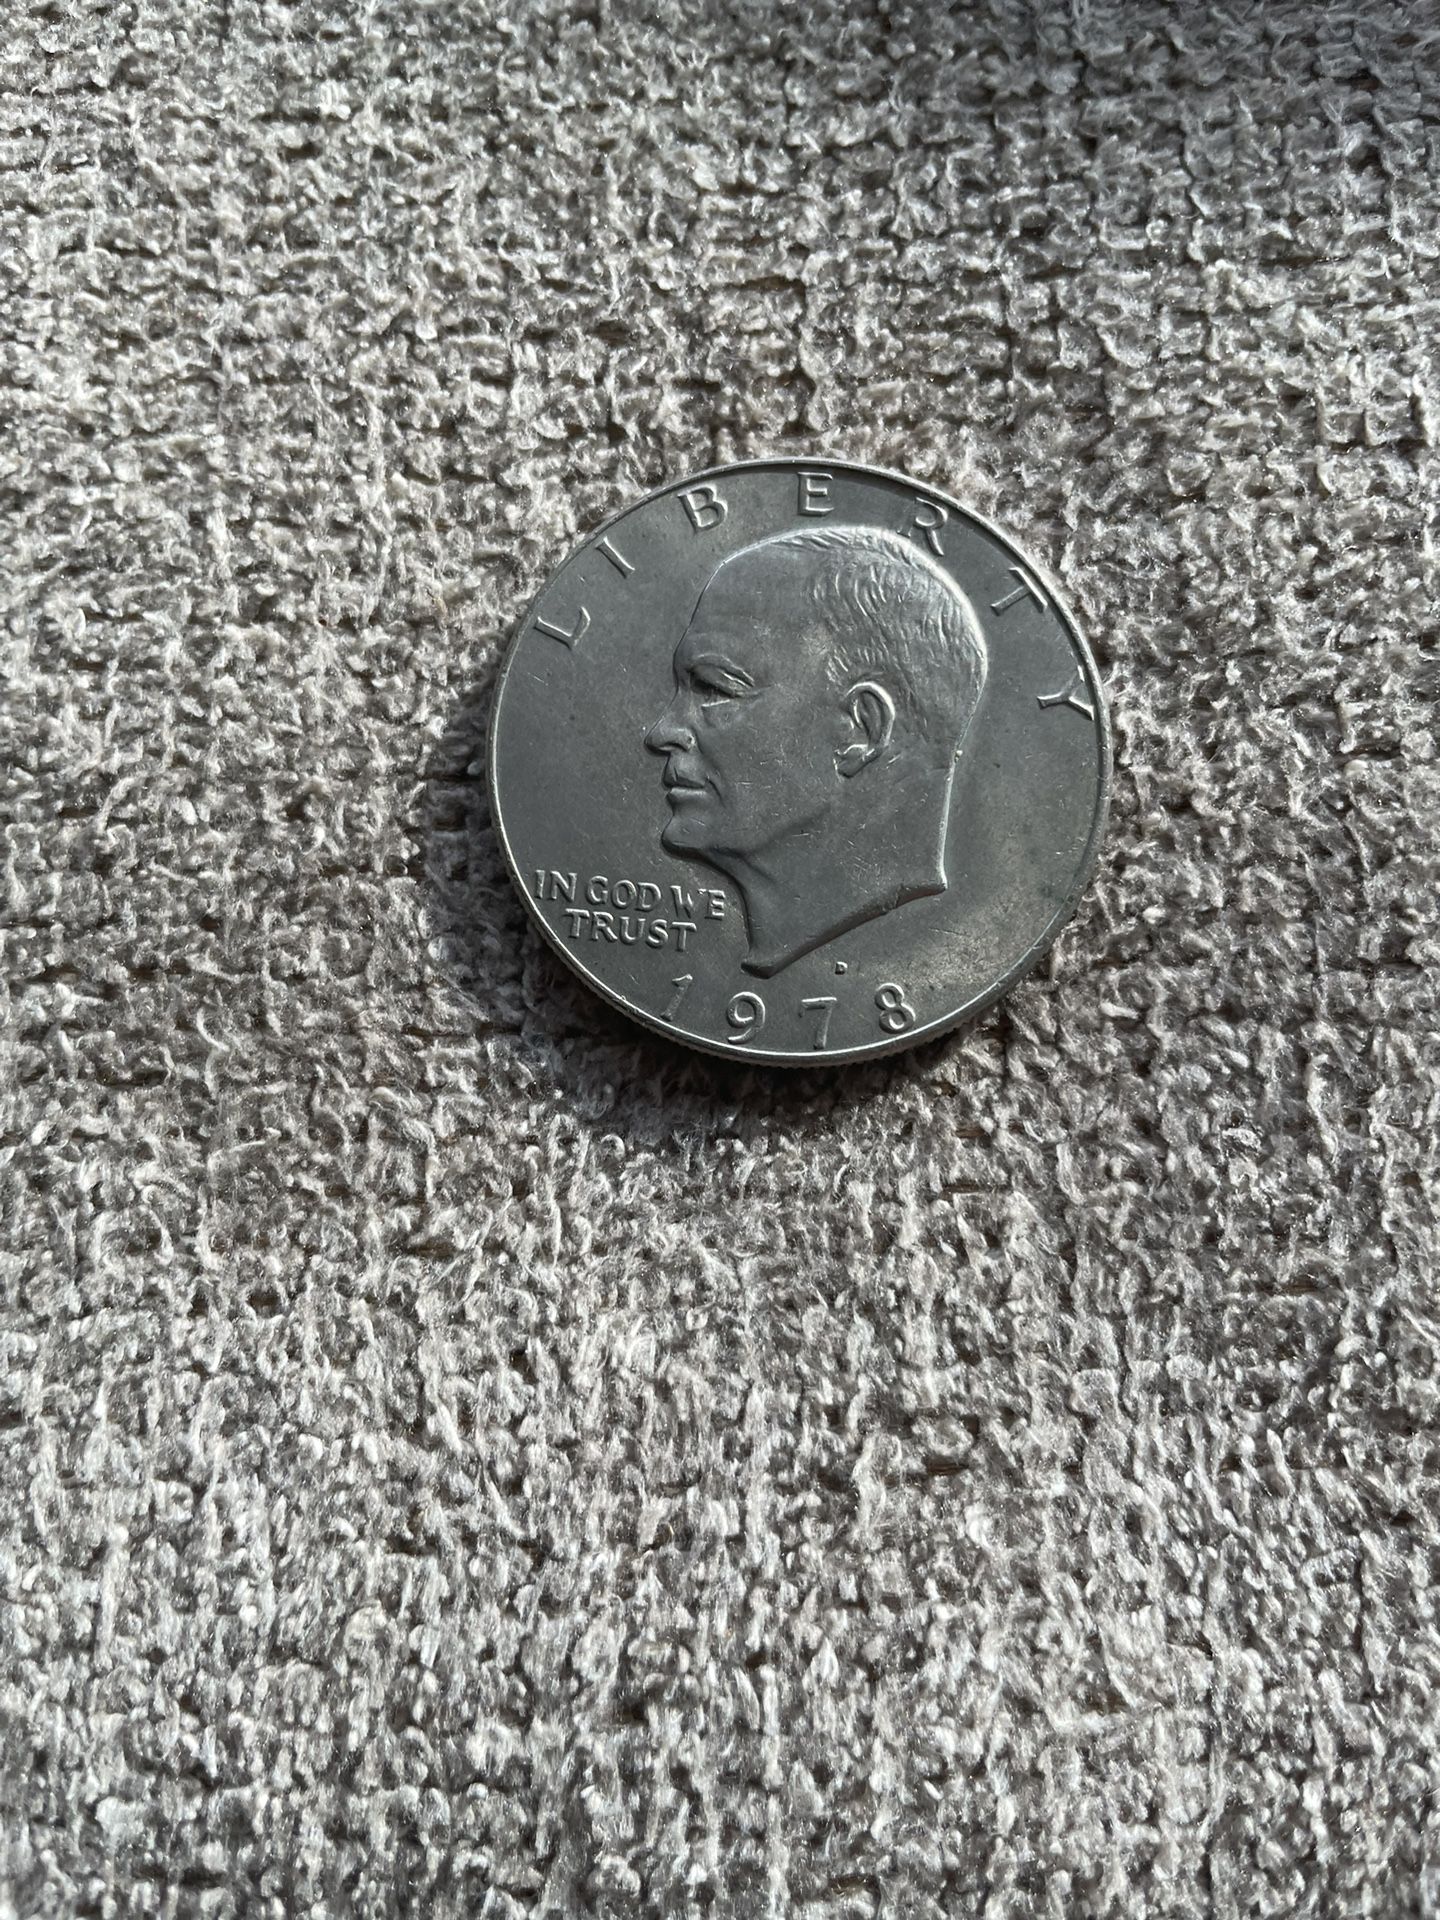 1971 Eisenhower, one dollar coin uncirculated